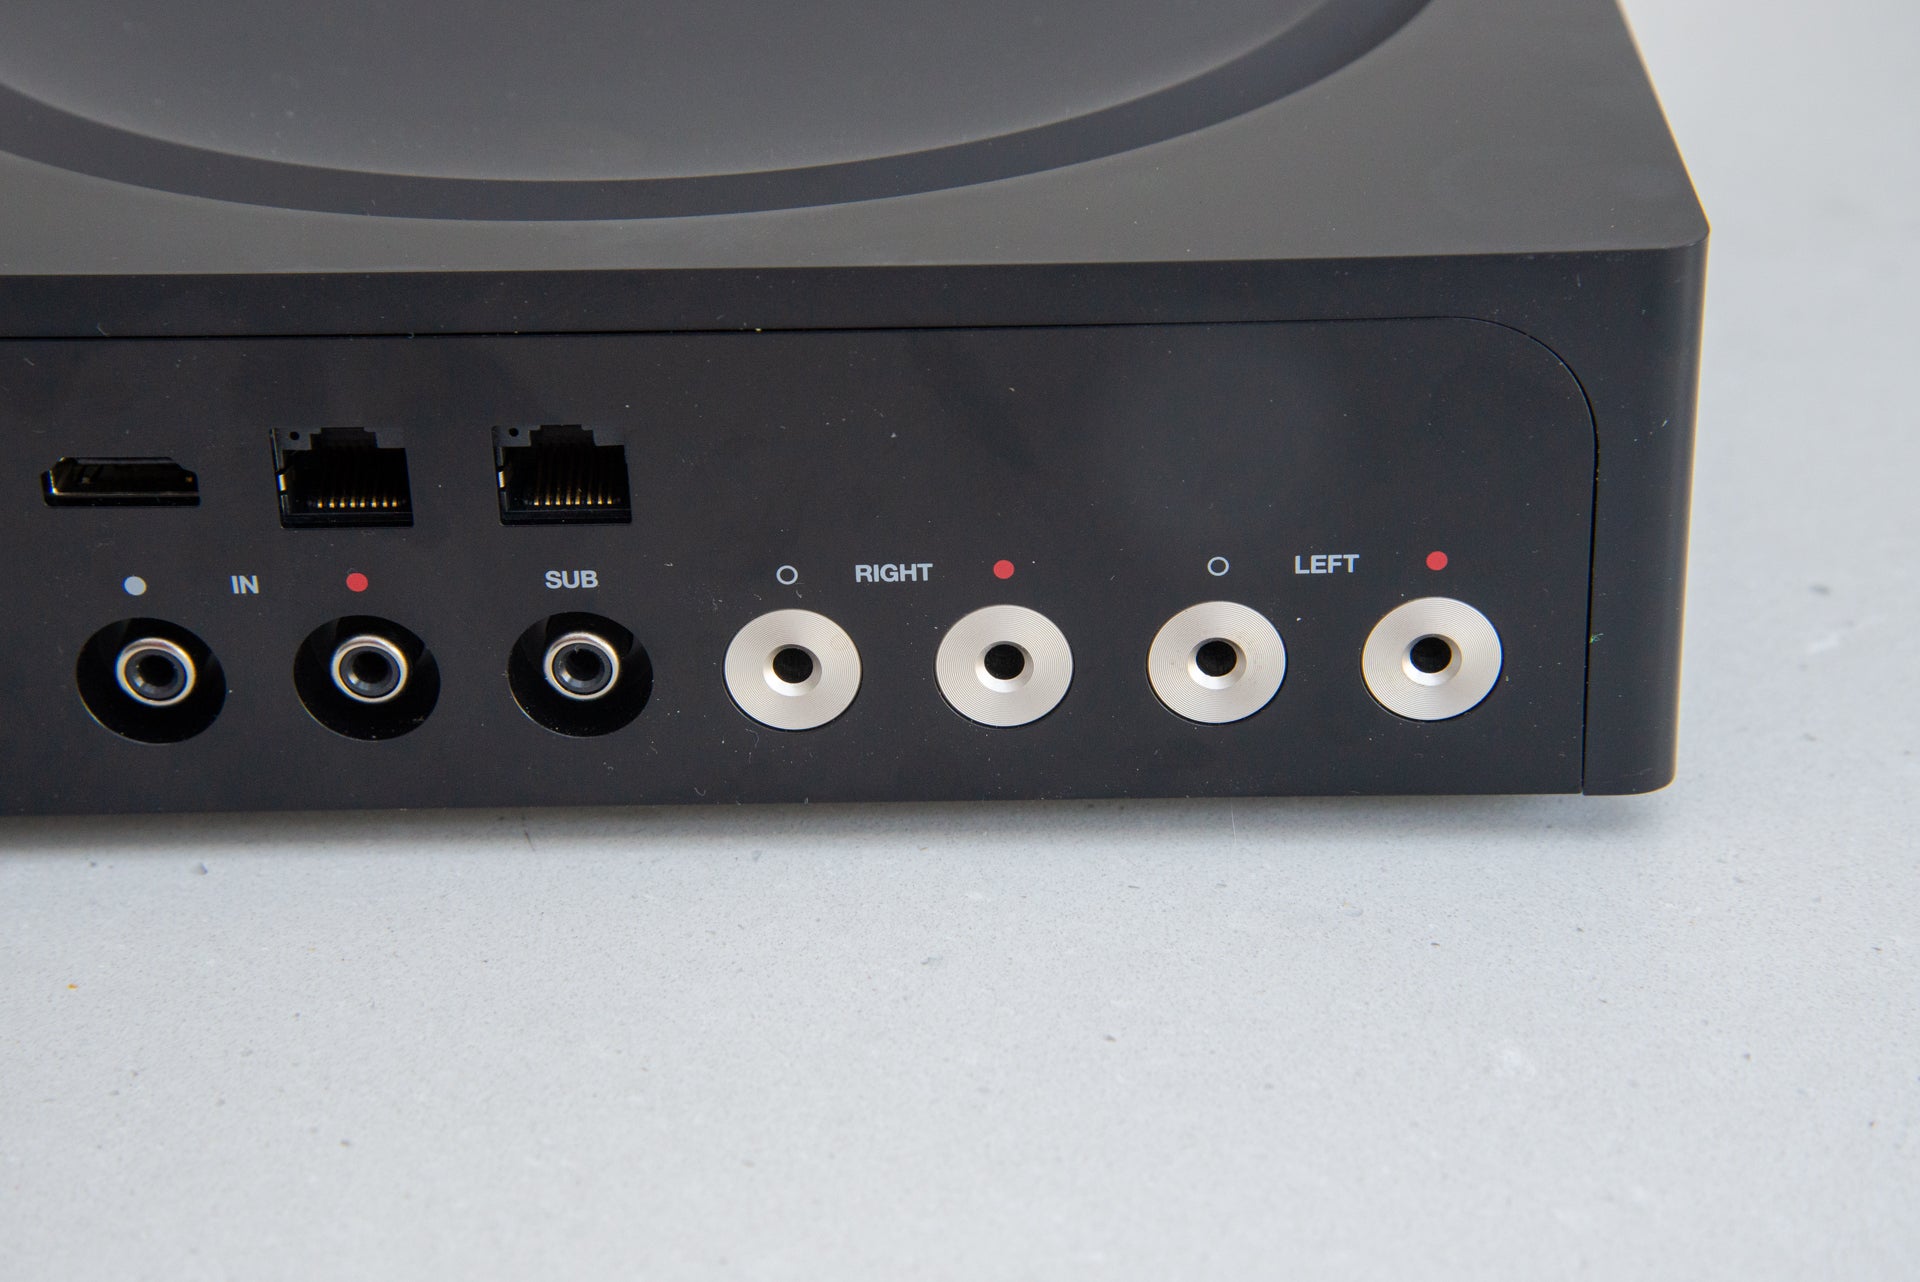 kyst Ulejlighed Ripples Sonos Amp Review - The best-sounding Sonos speaker